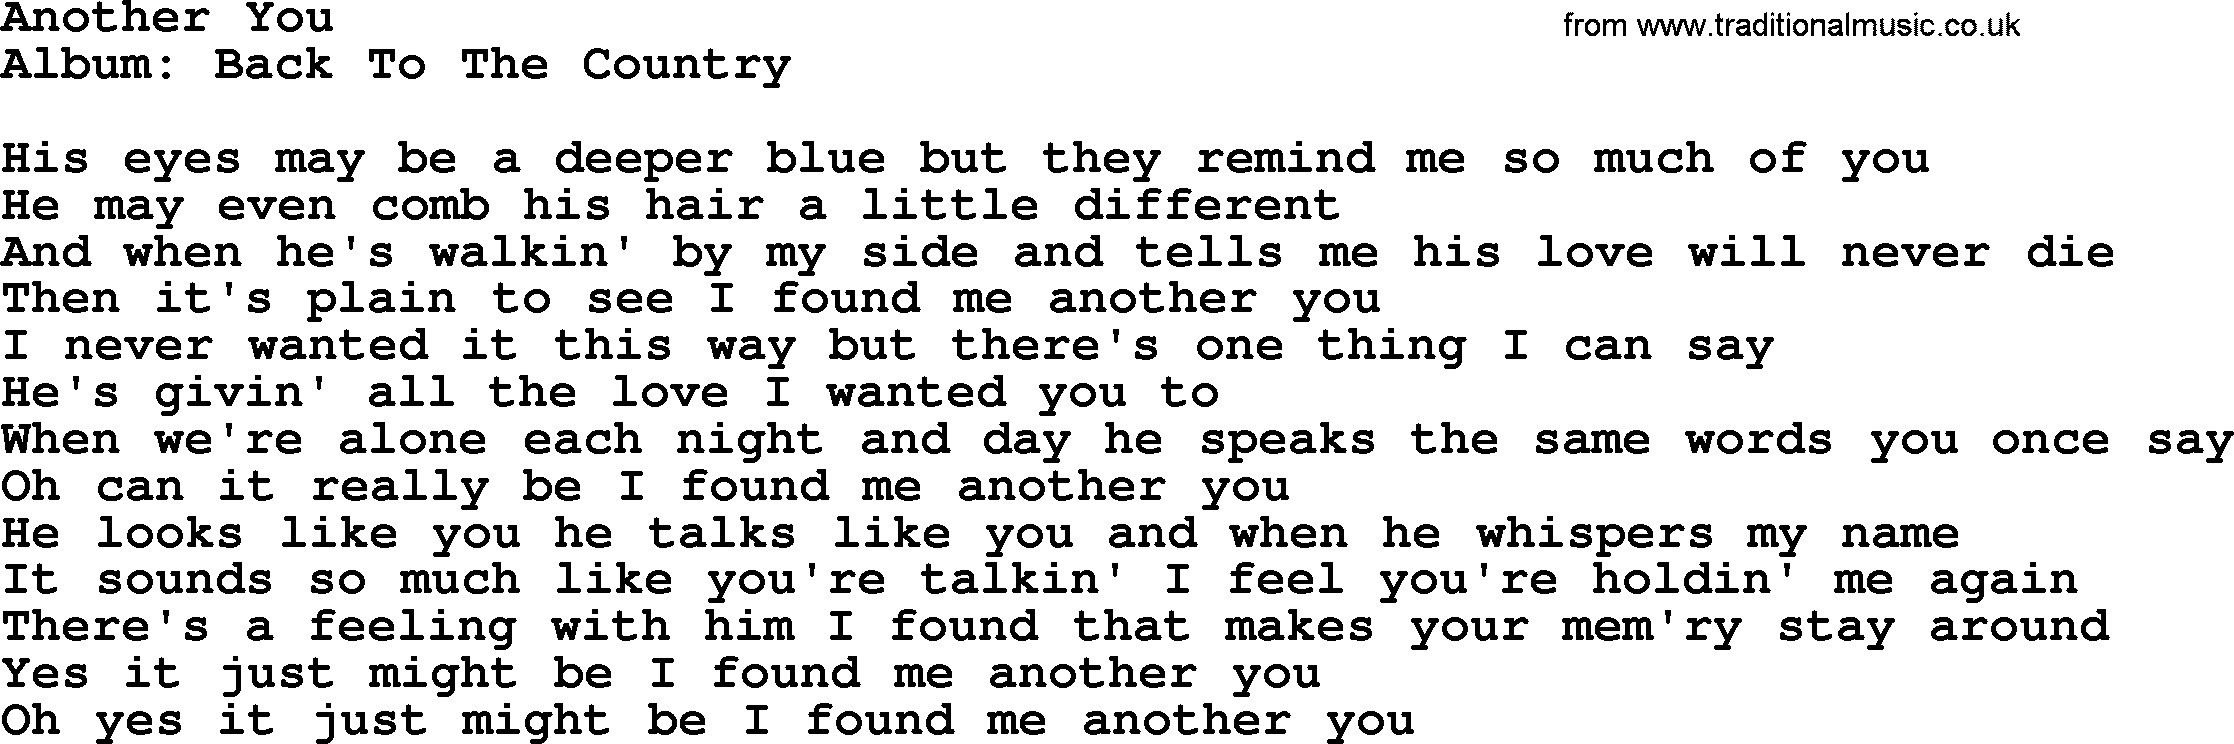 Loretta Lynn song: Another You lyrics